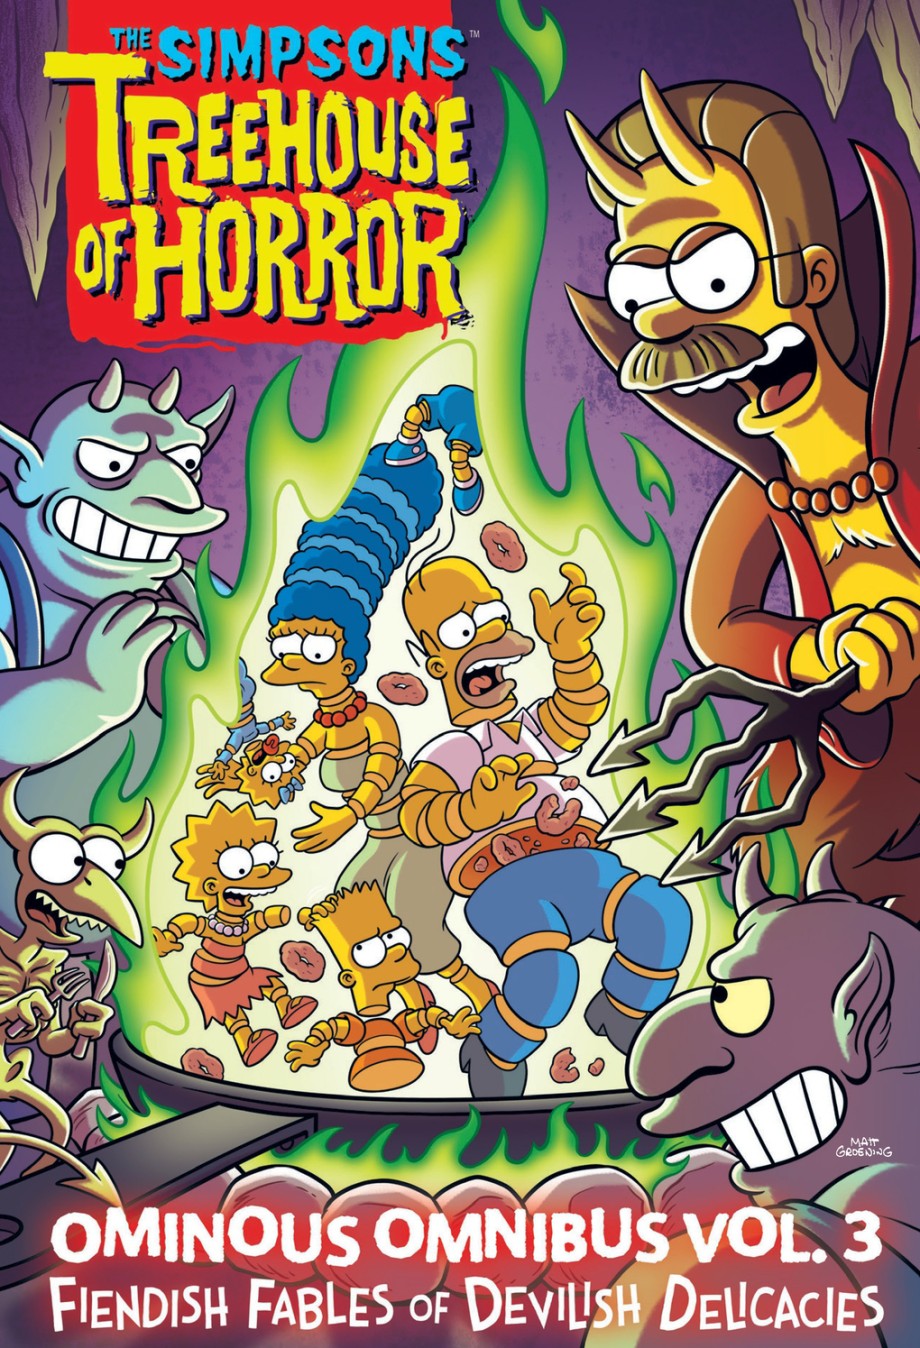 Simpsons Treehouse of Horror Ominous Omnibus Vol. 3 Fiendish Fables of Devilish Delicacies